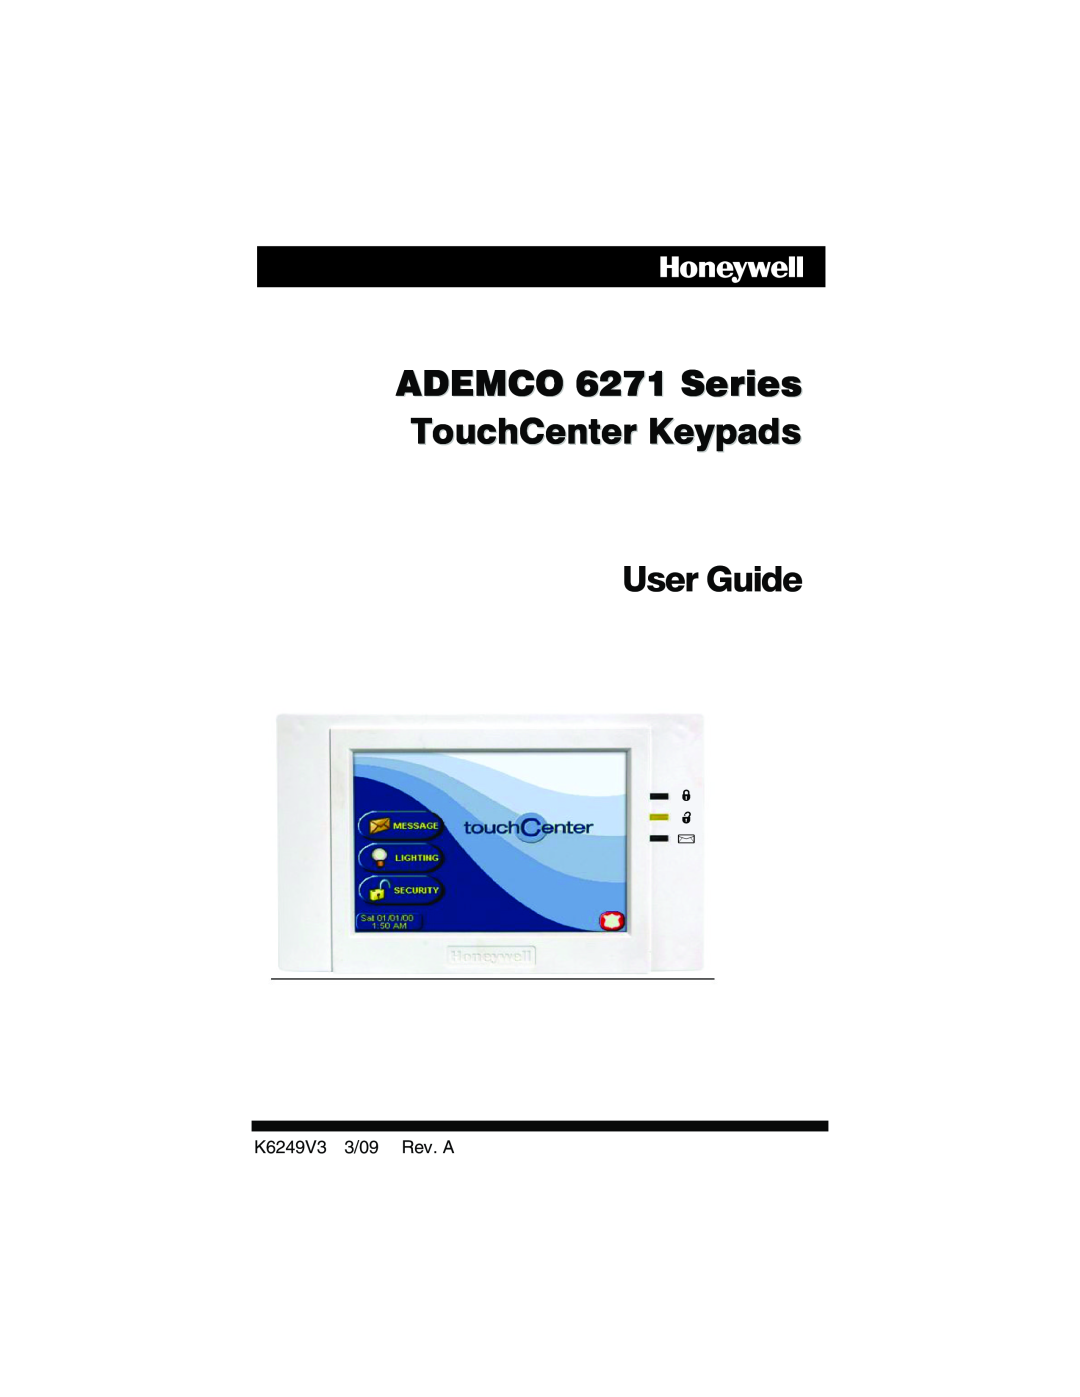 Honeywell manual User Guide, ADEMCO 6271 Series TouchCenter Keypads 